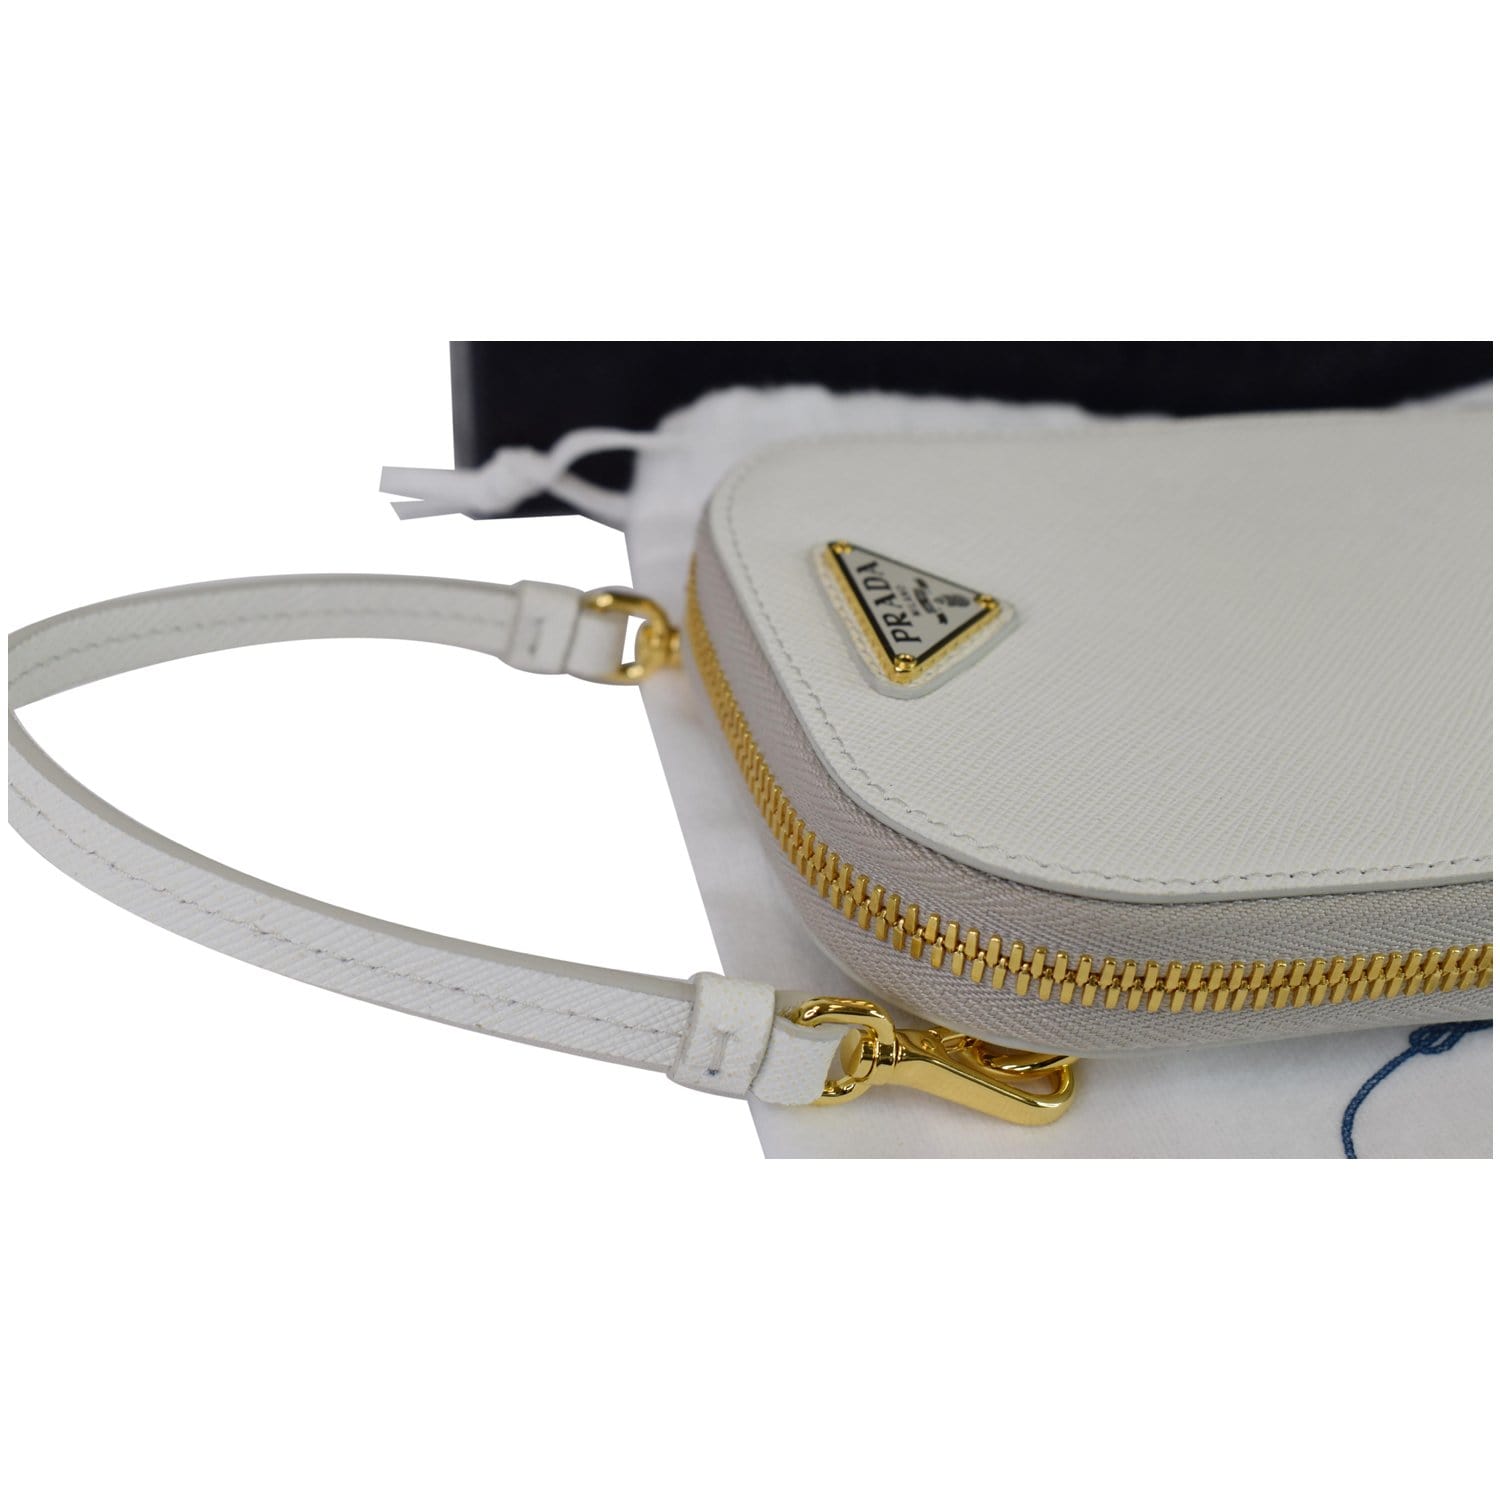 PRADA Saffiano Triangle Leather Crossbody Phone Pouch Bag White